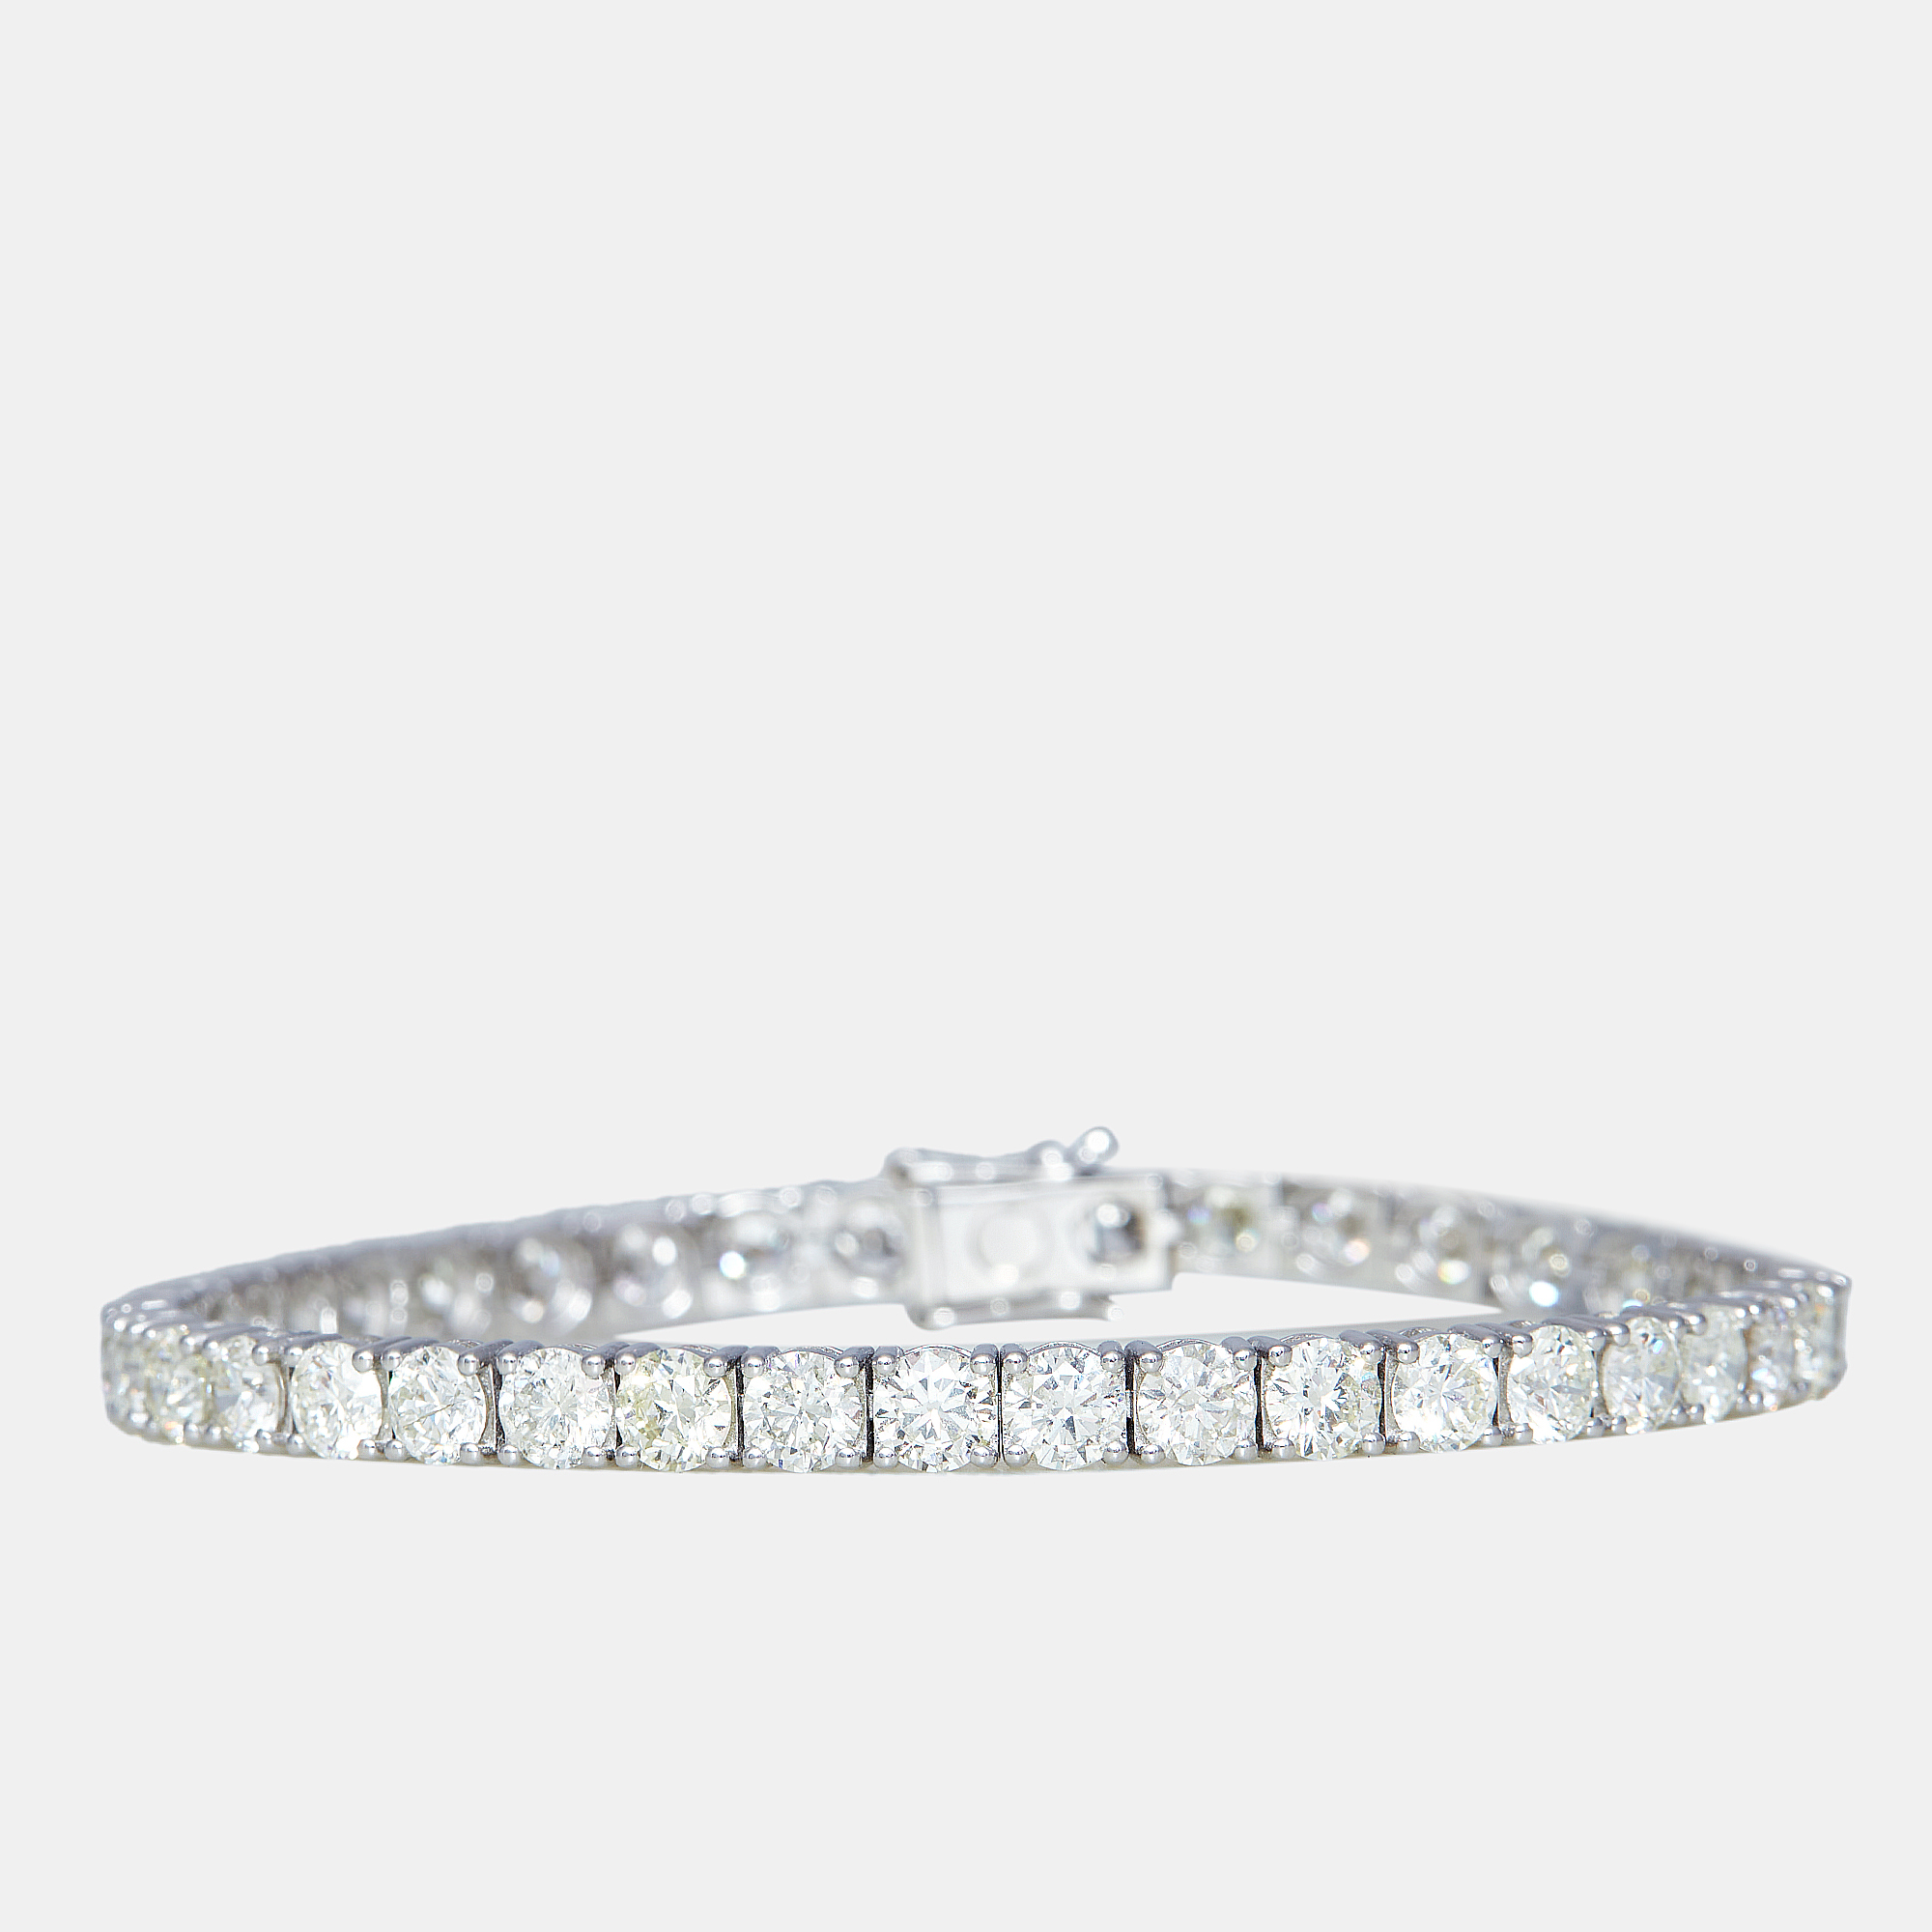 The diamond edit 18k white gold 12.15 ct diamond bracelet